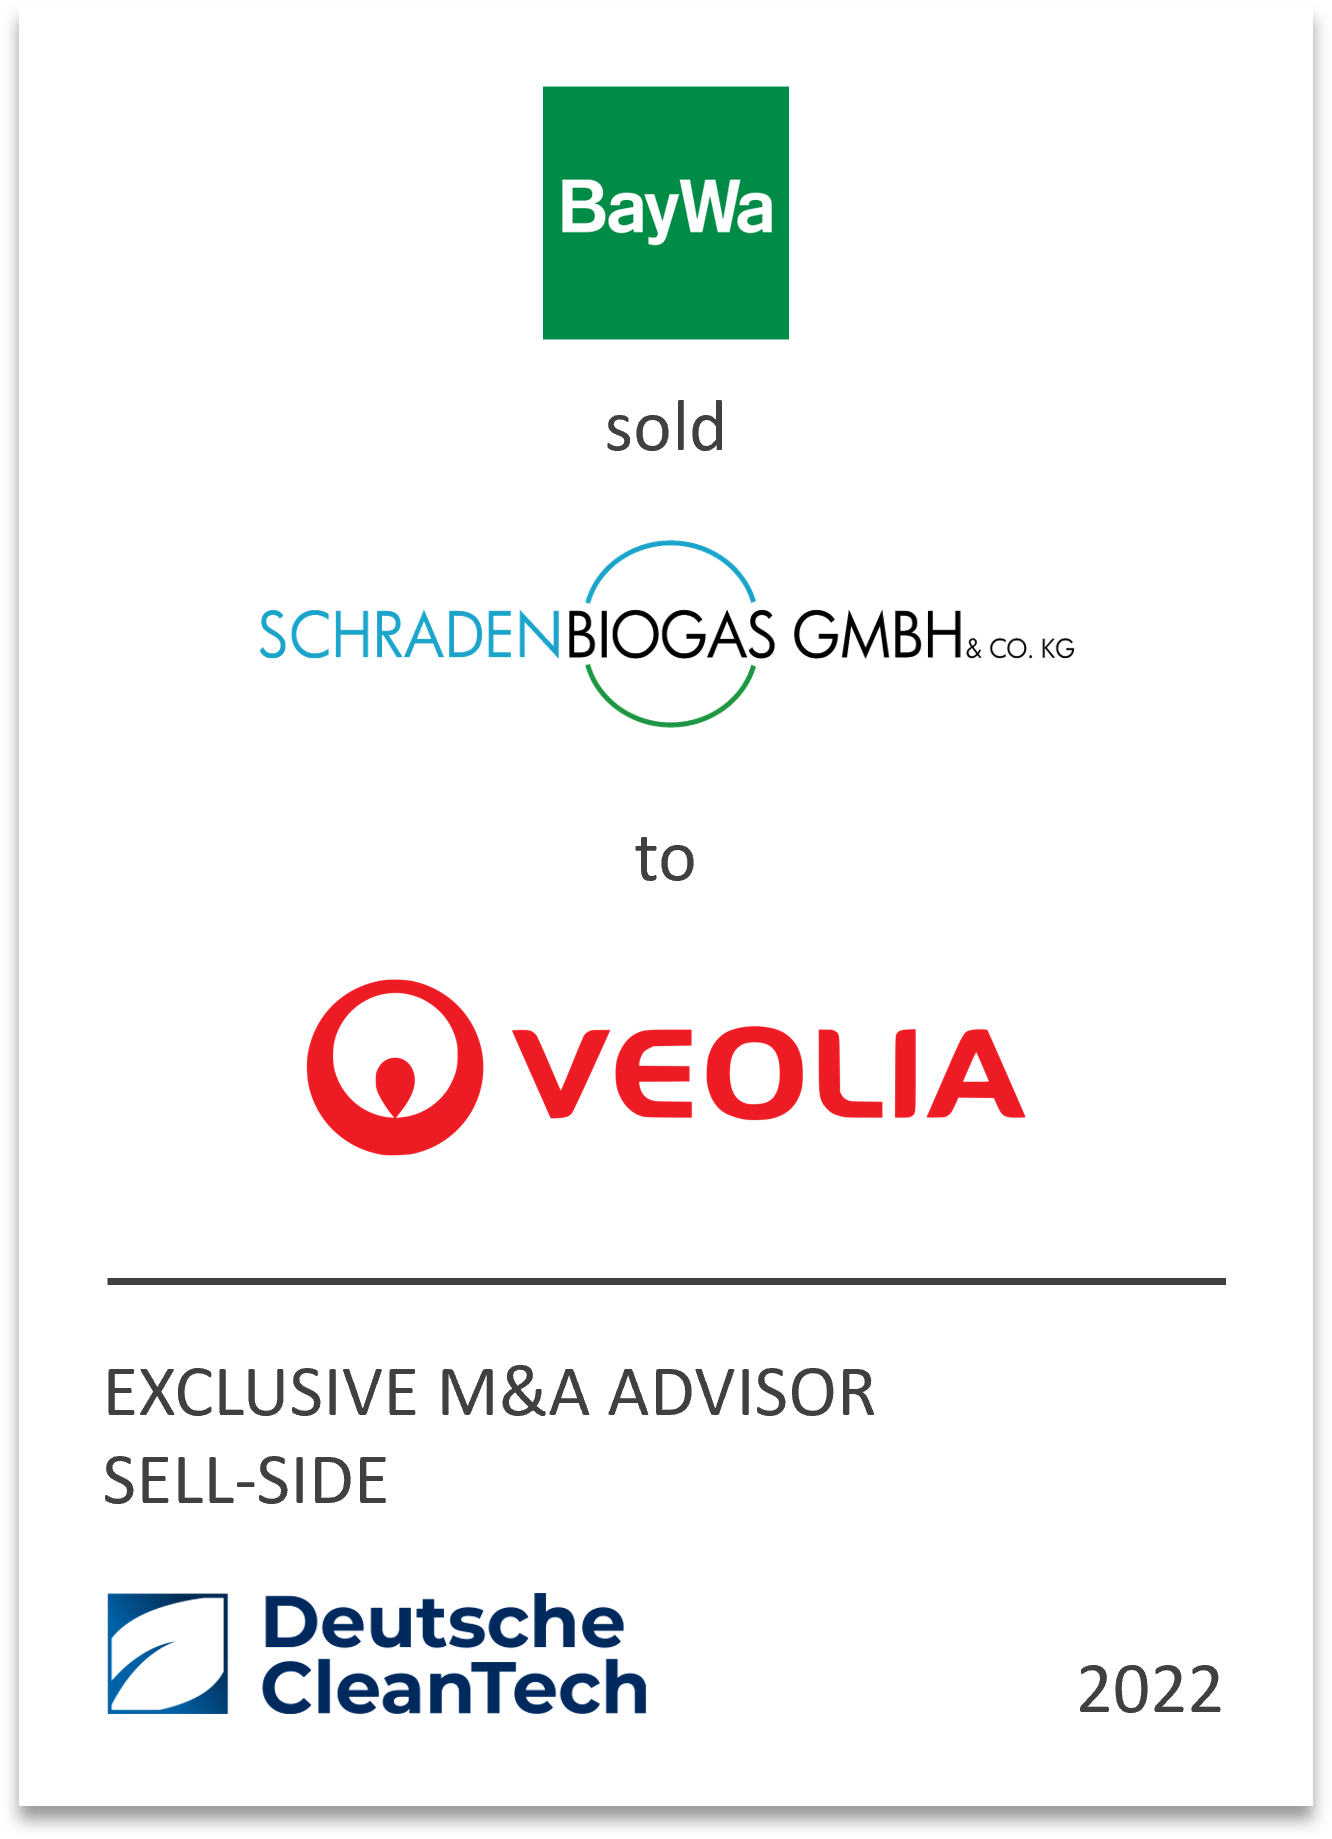 BayWa sold Schradenbiogas GmbH & Co. KG to Veolia